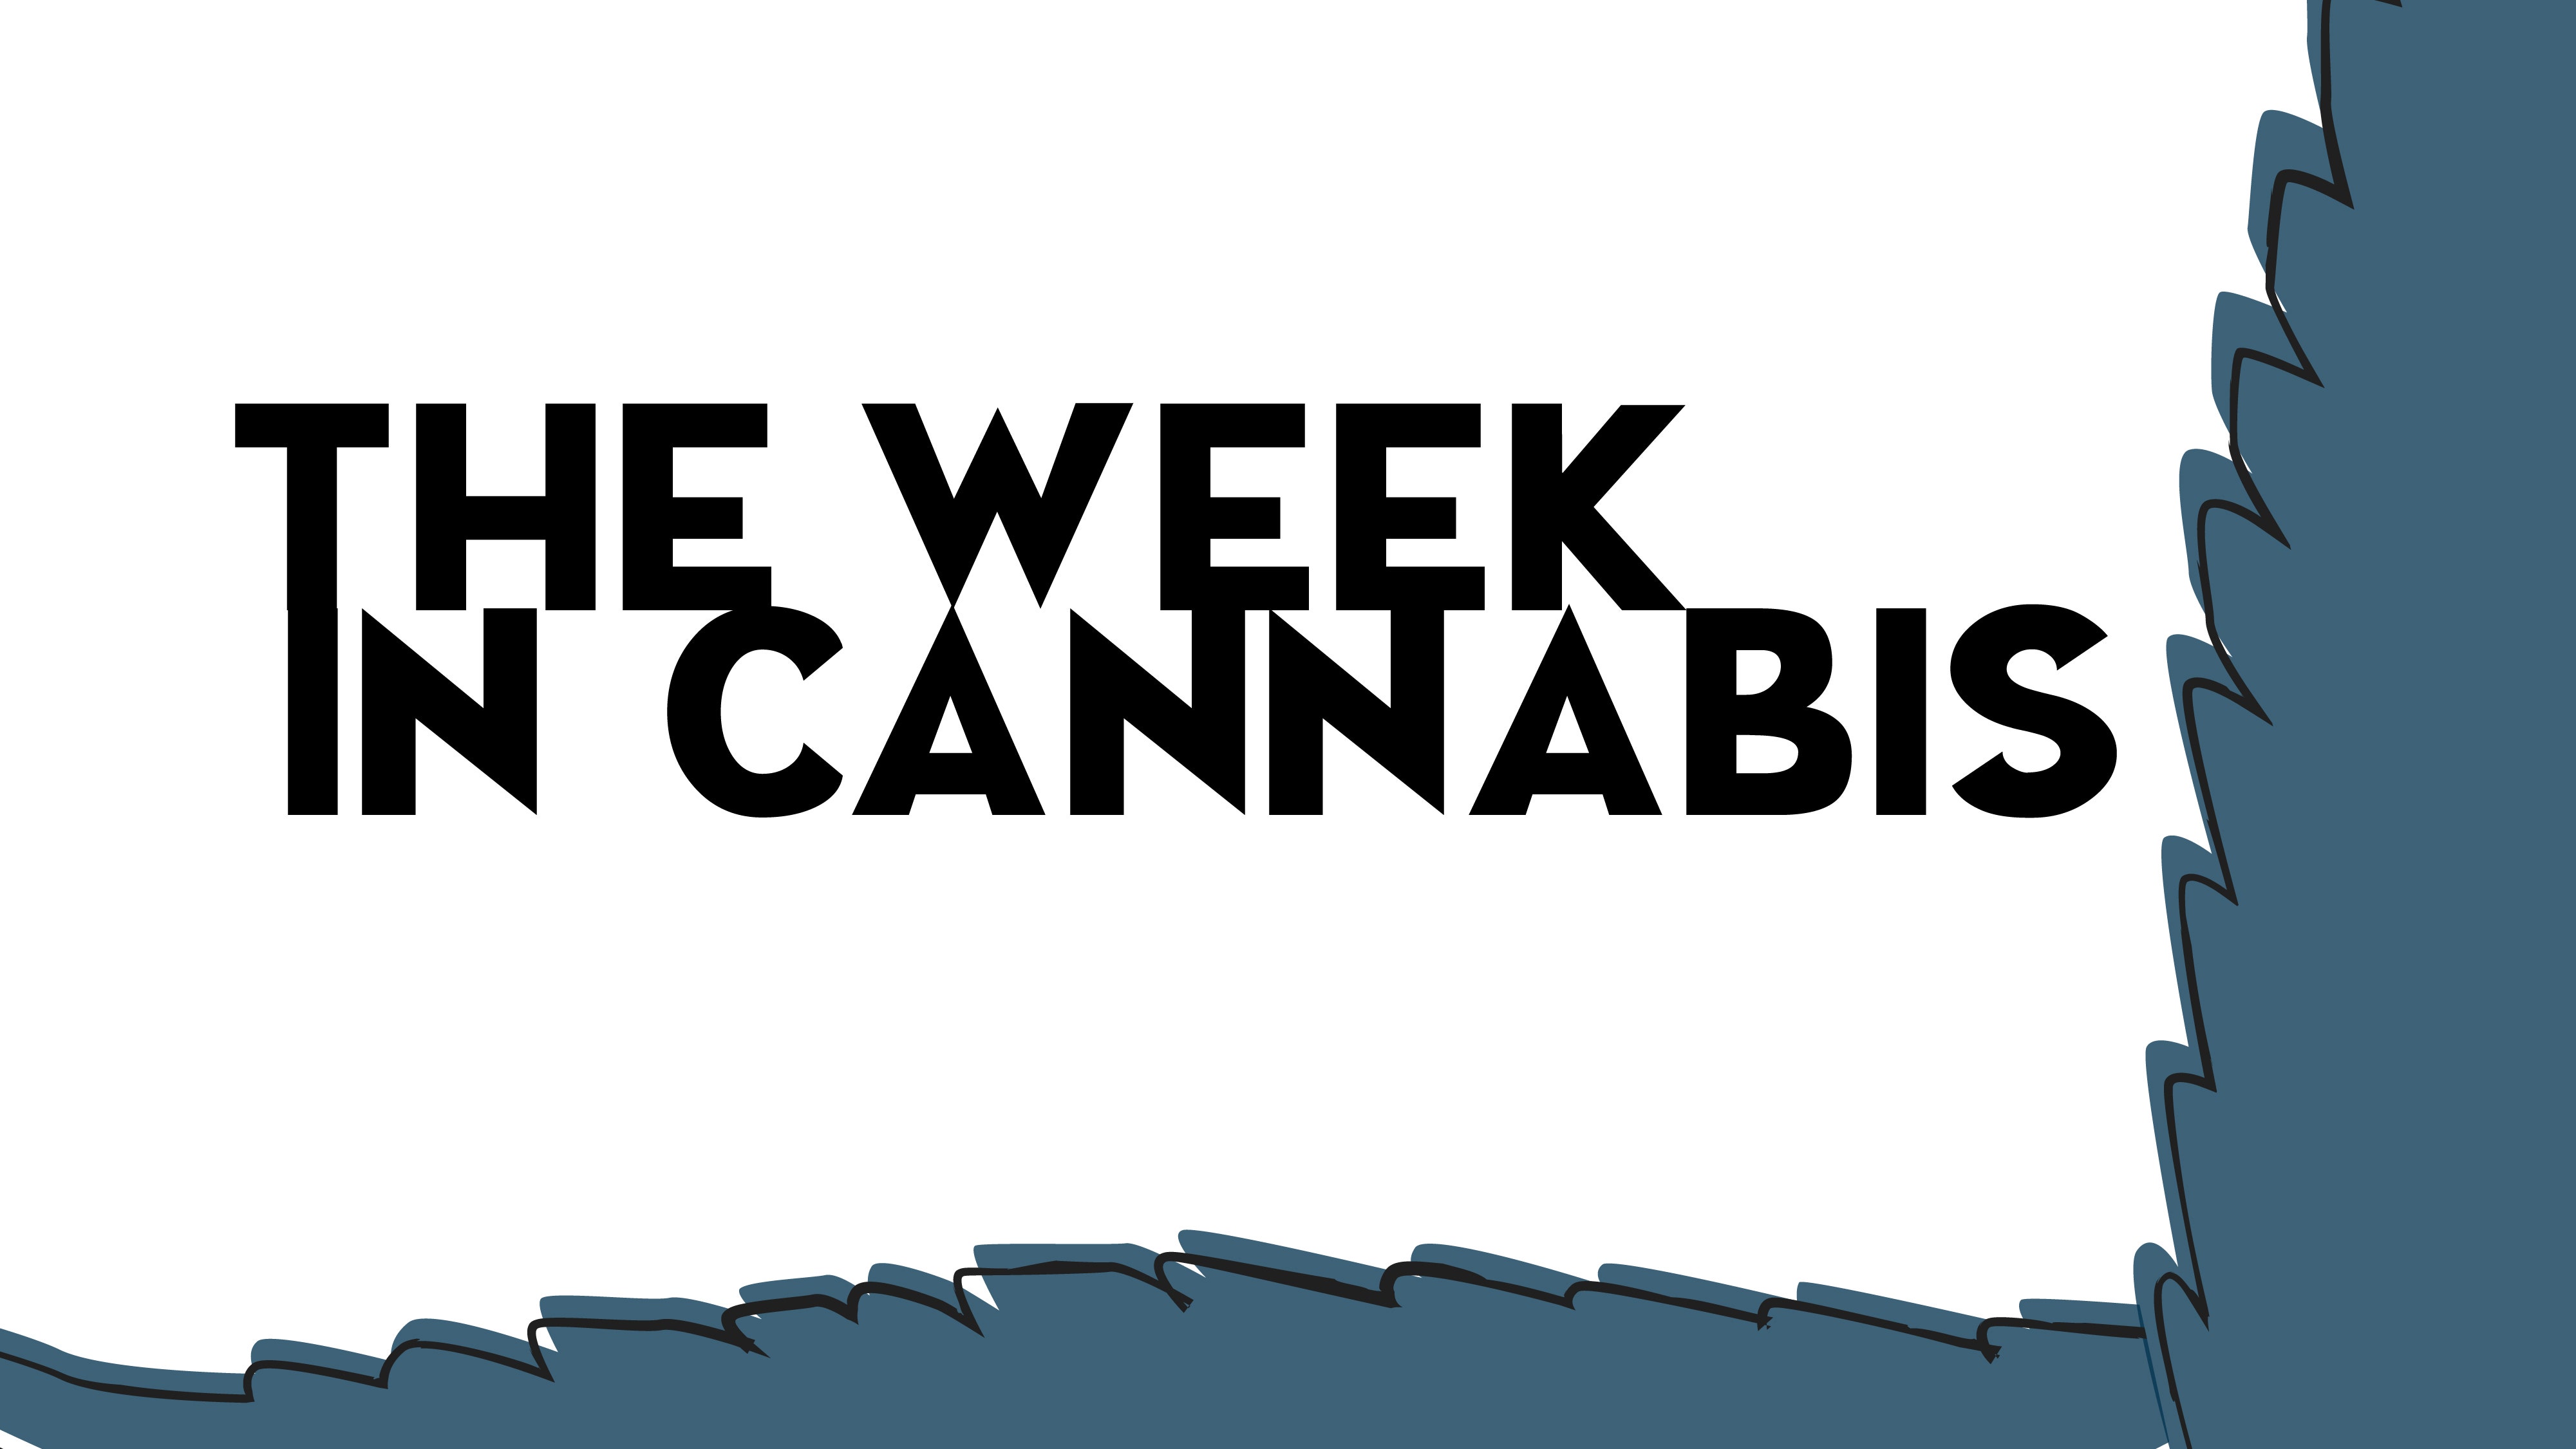 The Week In Cannabis: Stocks In Green, FDA's CBD Report, Amazon's AWS, KushCo's Earnings